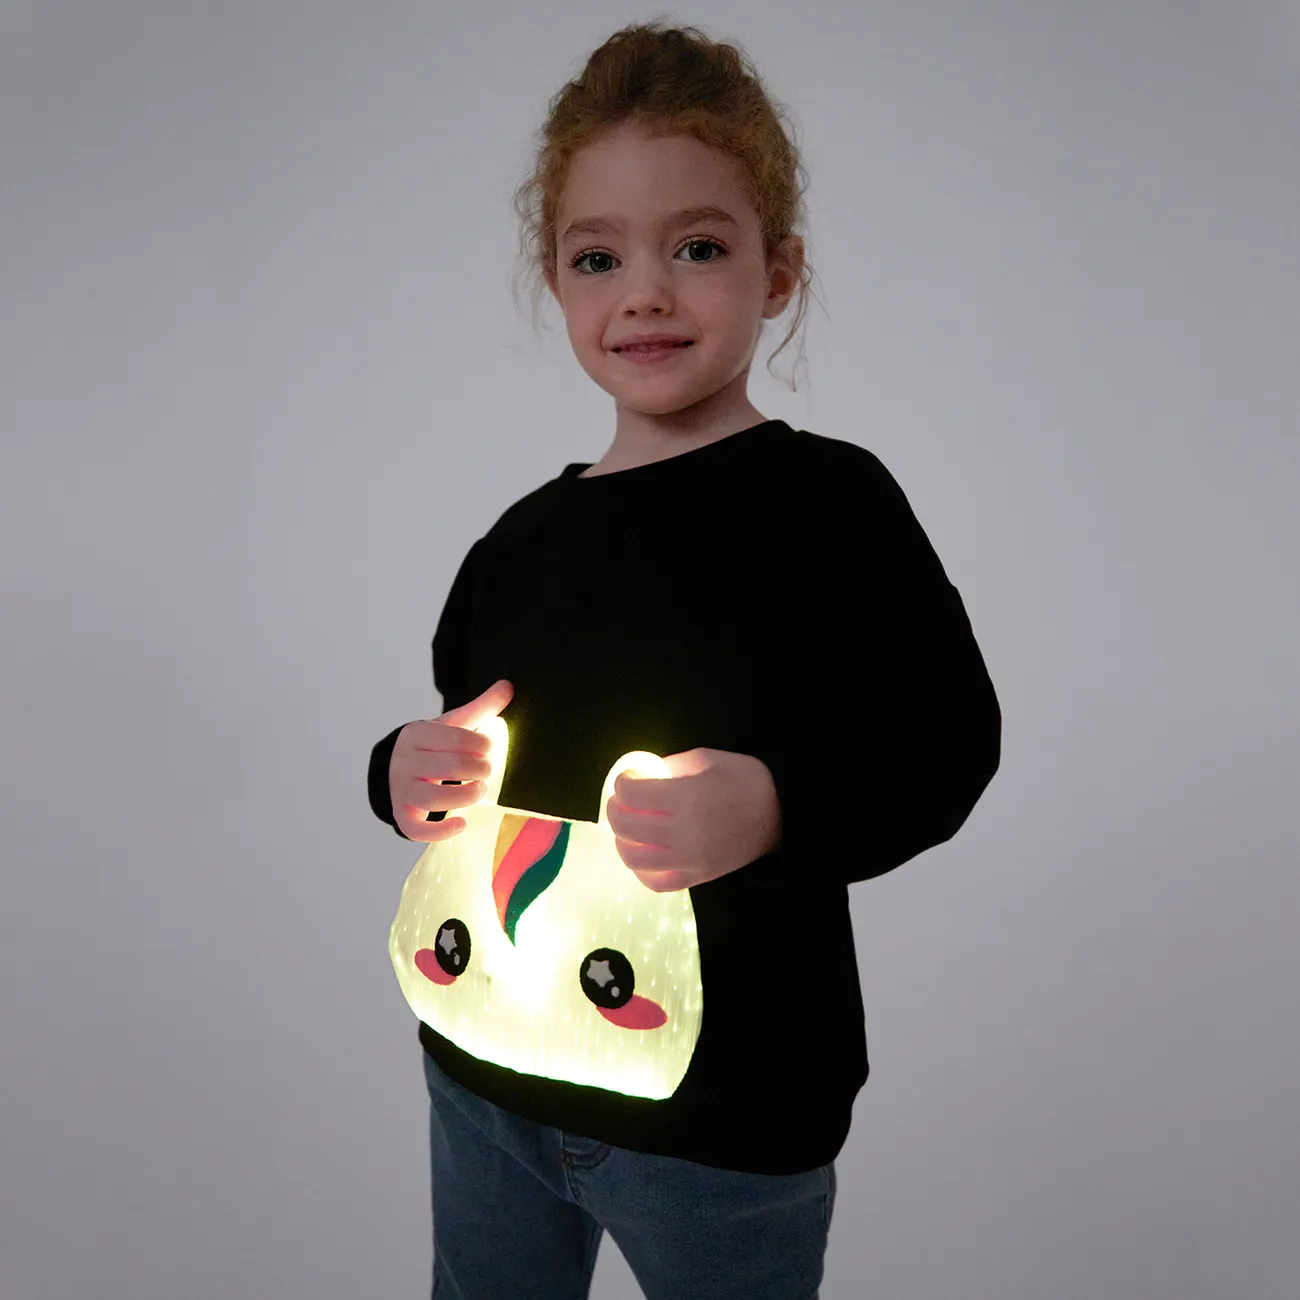 Go-Glow Illuminating Sweatshirt with Light Up Unicorn Including Controller (Built-In Battery) Black big image 1